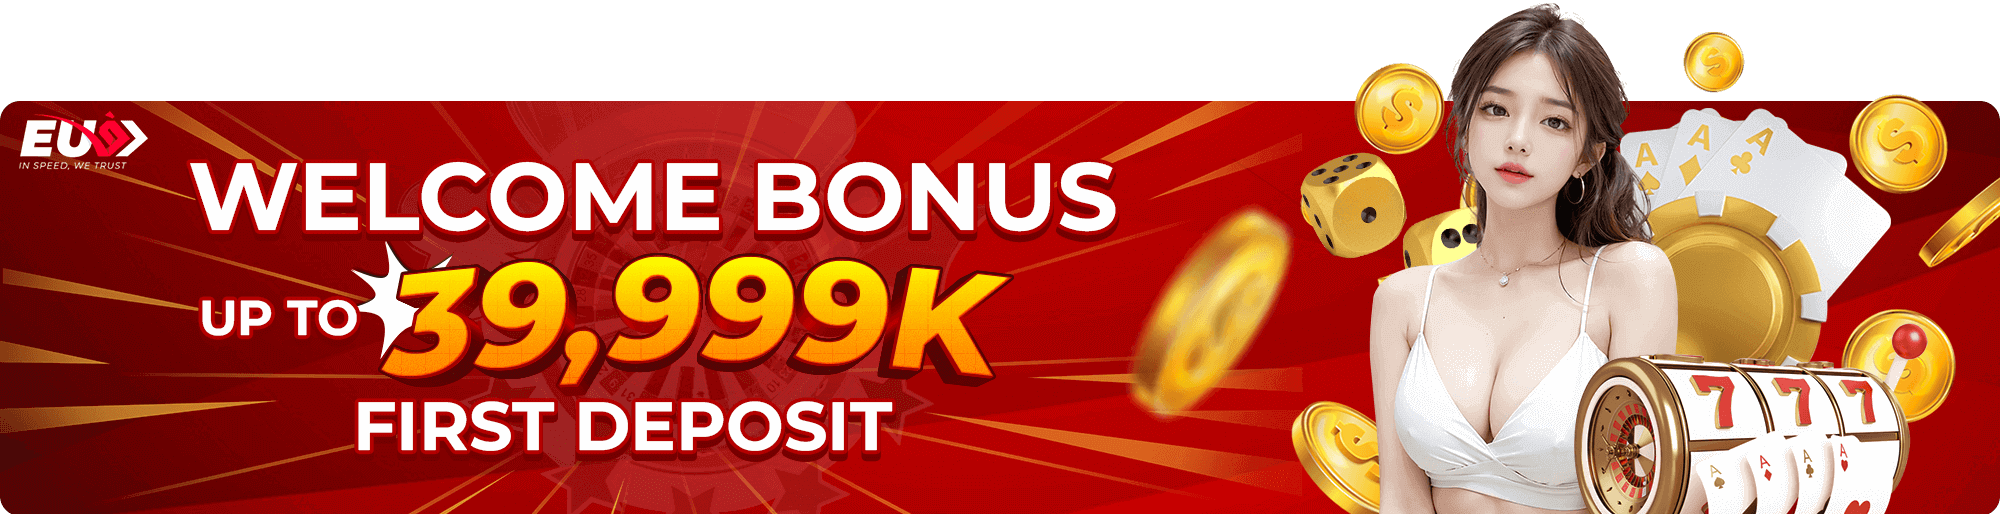 welcome bonus up to 39,999K